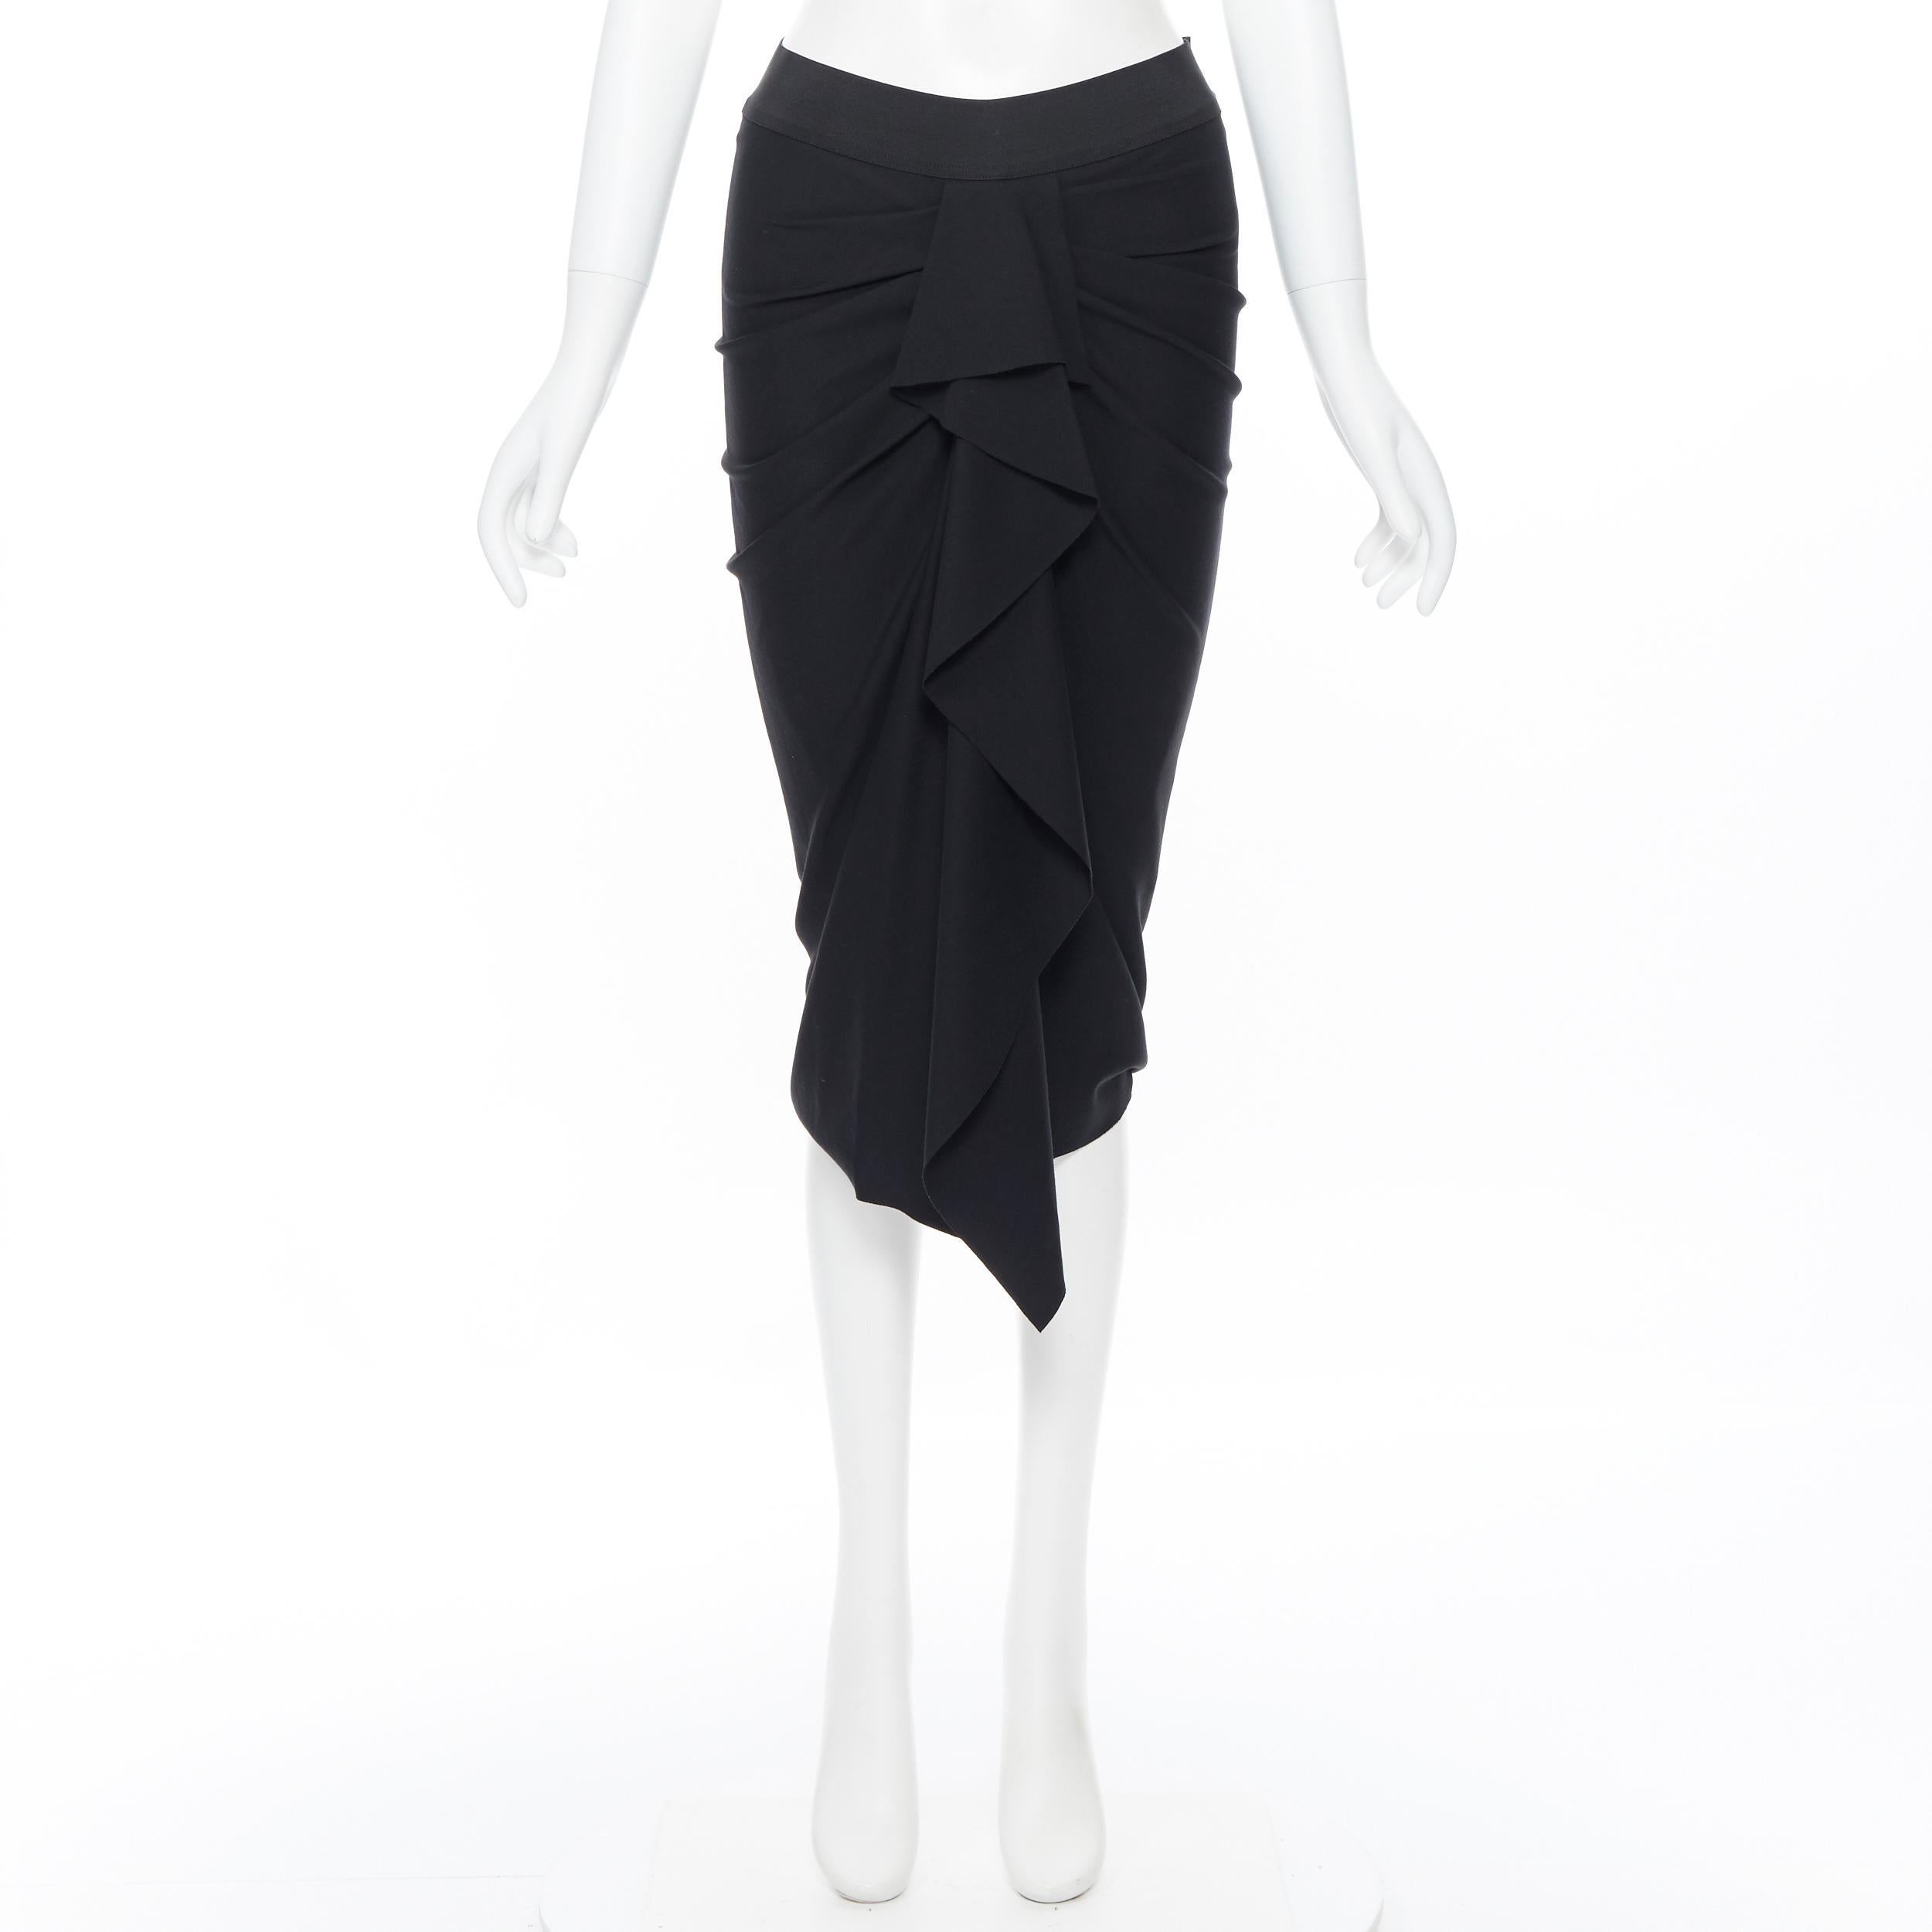 Black DONNA KARAN black viscose blend elastic waist ruched ruffle skirt US6 26